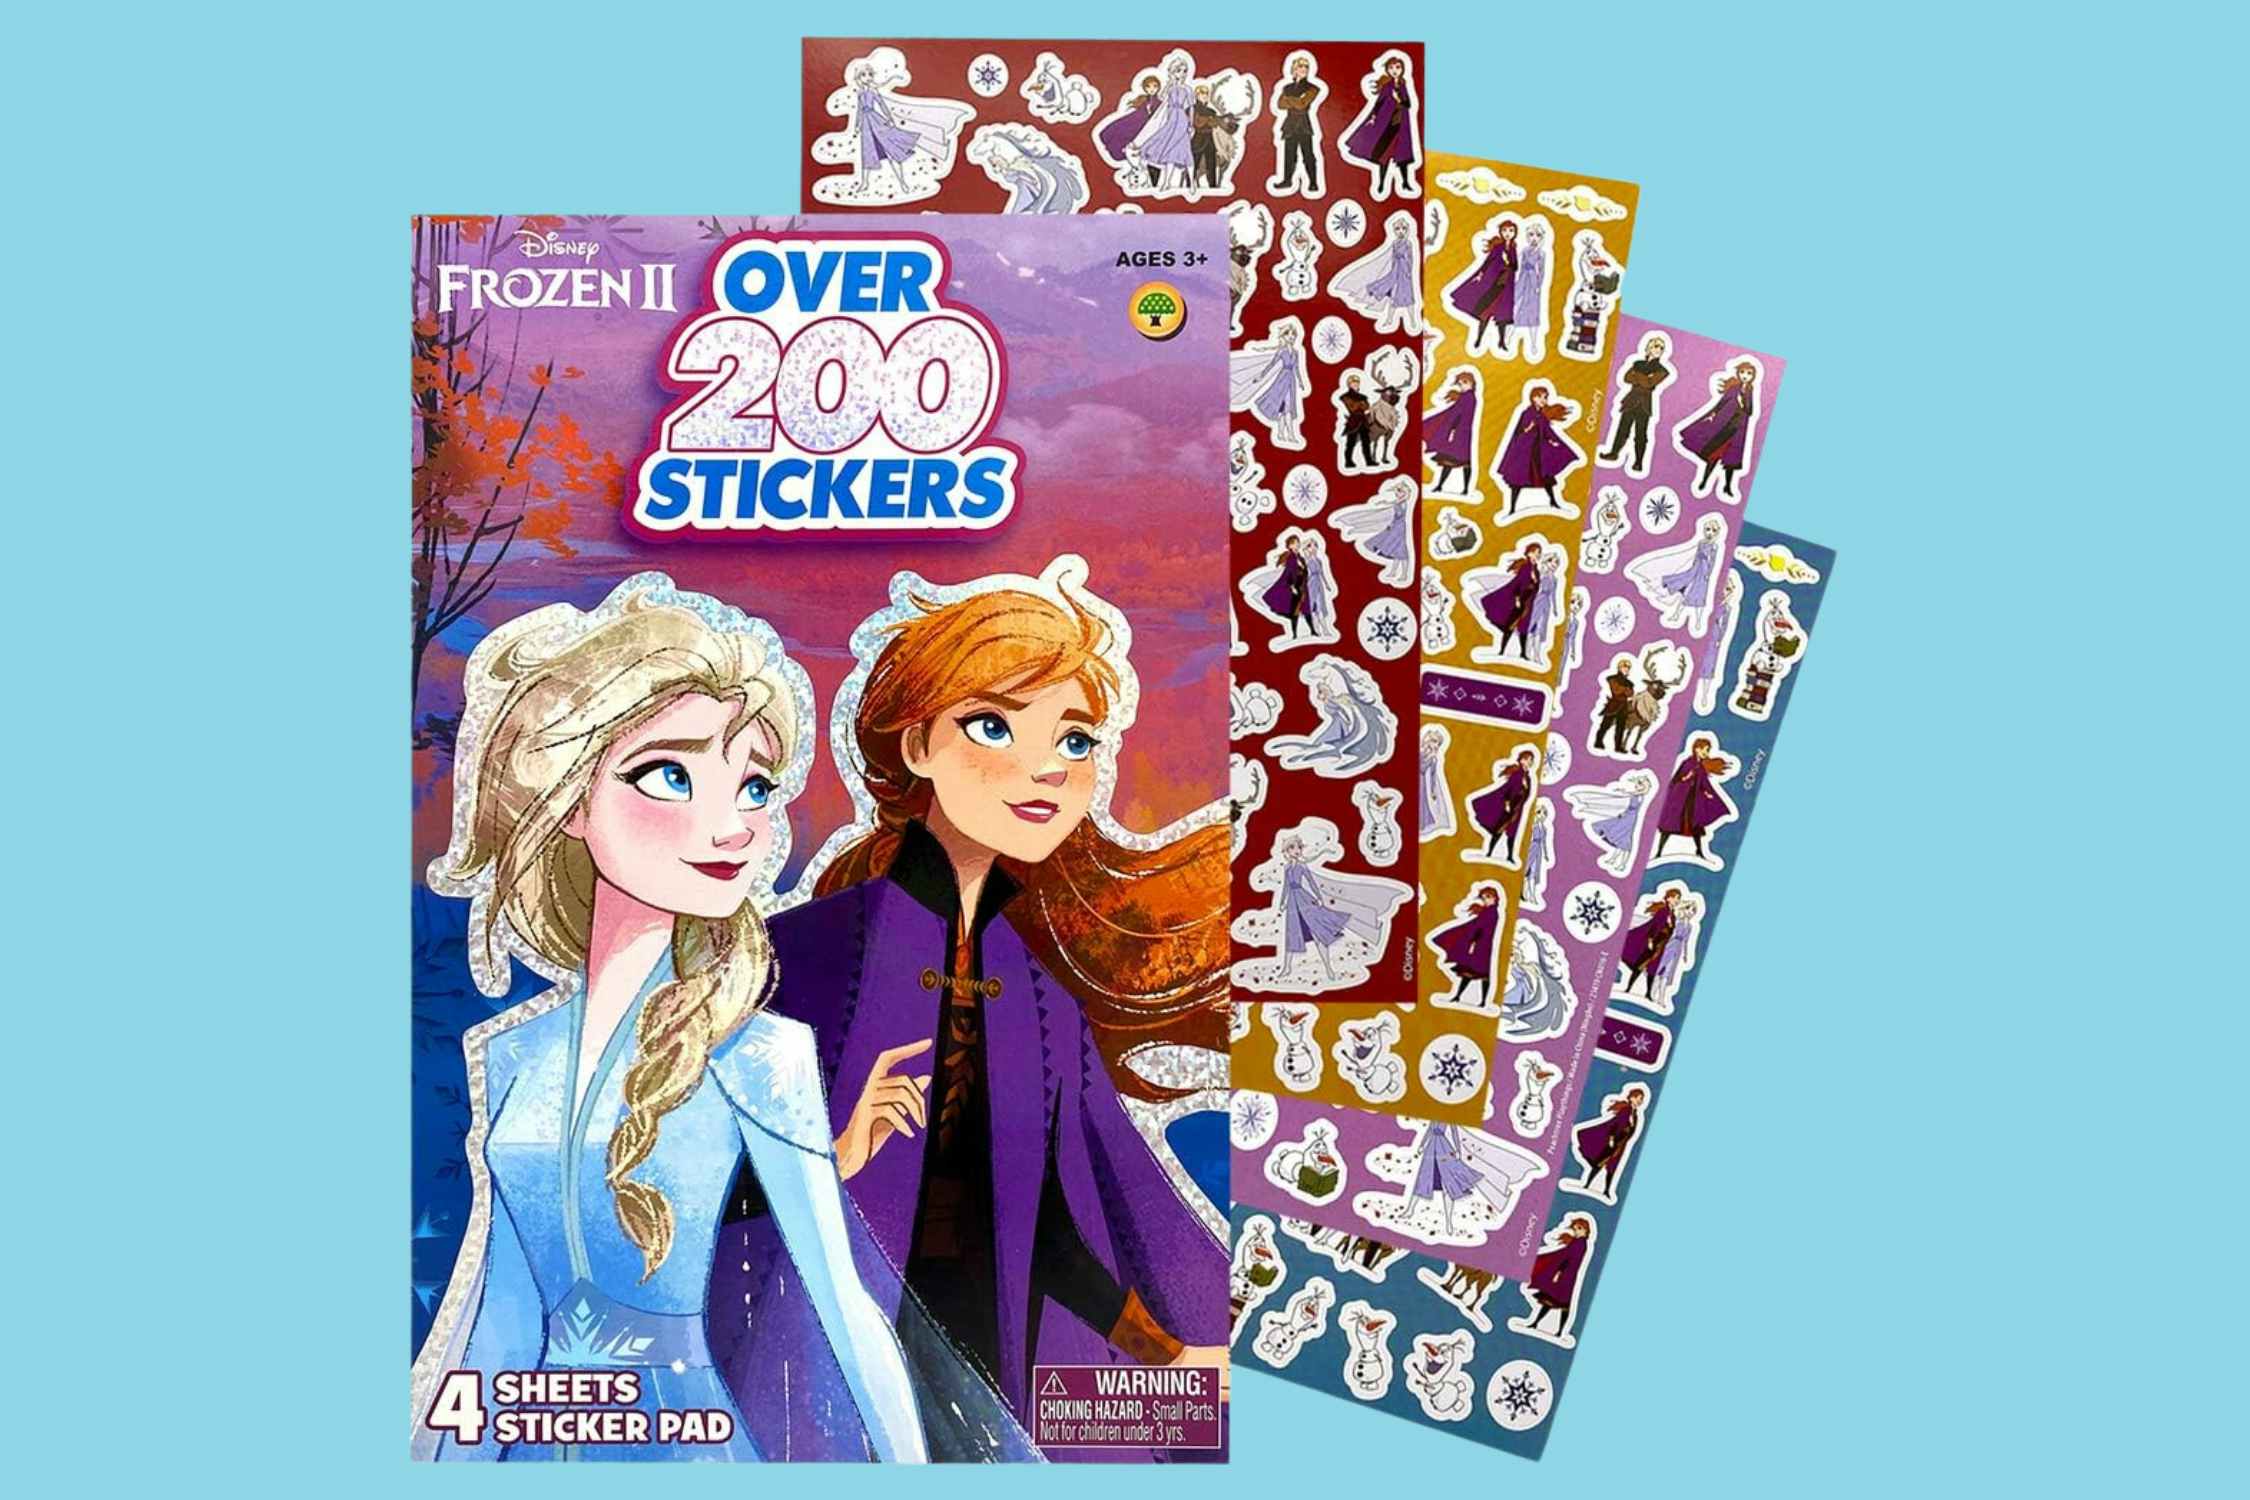 Disney Frozen II Sticker Book, Just $3.99 on Amazon